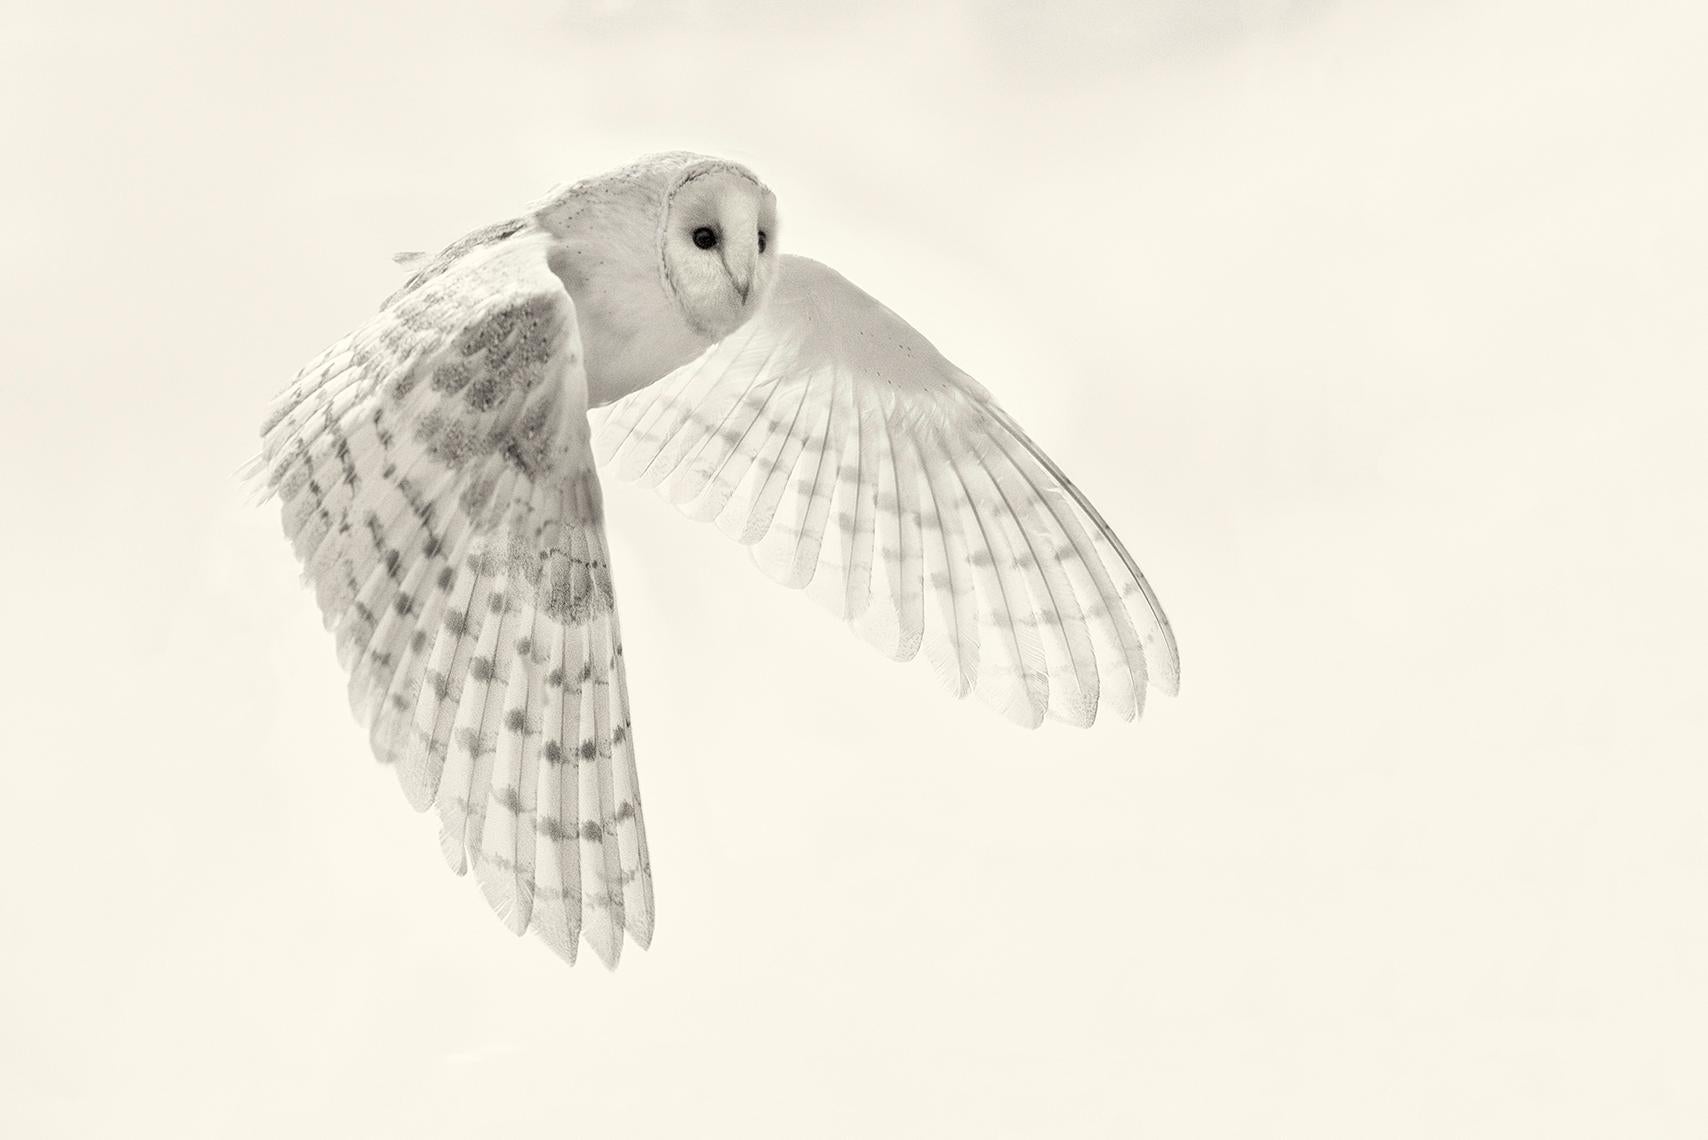 Beth Moon Animal Print - Barn Owl Study 4